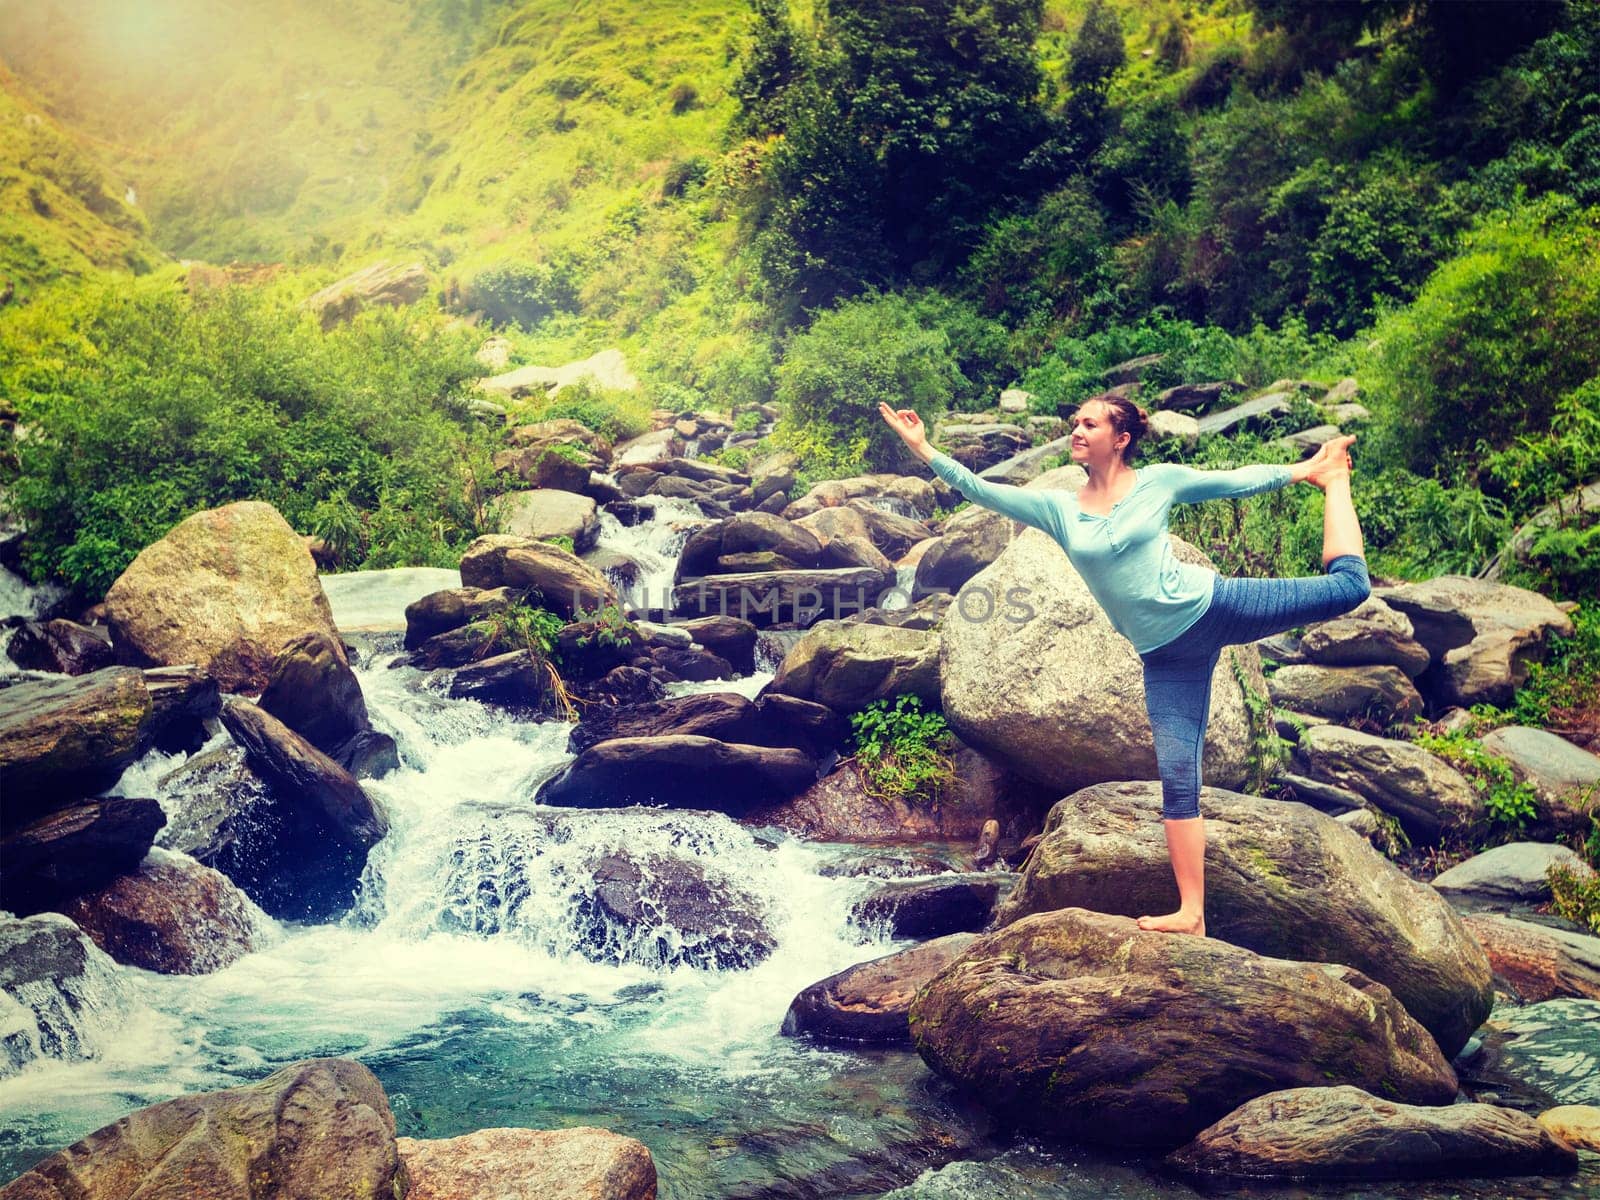 Woman doing yoga asana Natarajasana outdoors at waterfall by dimol